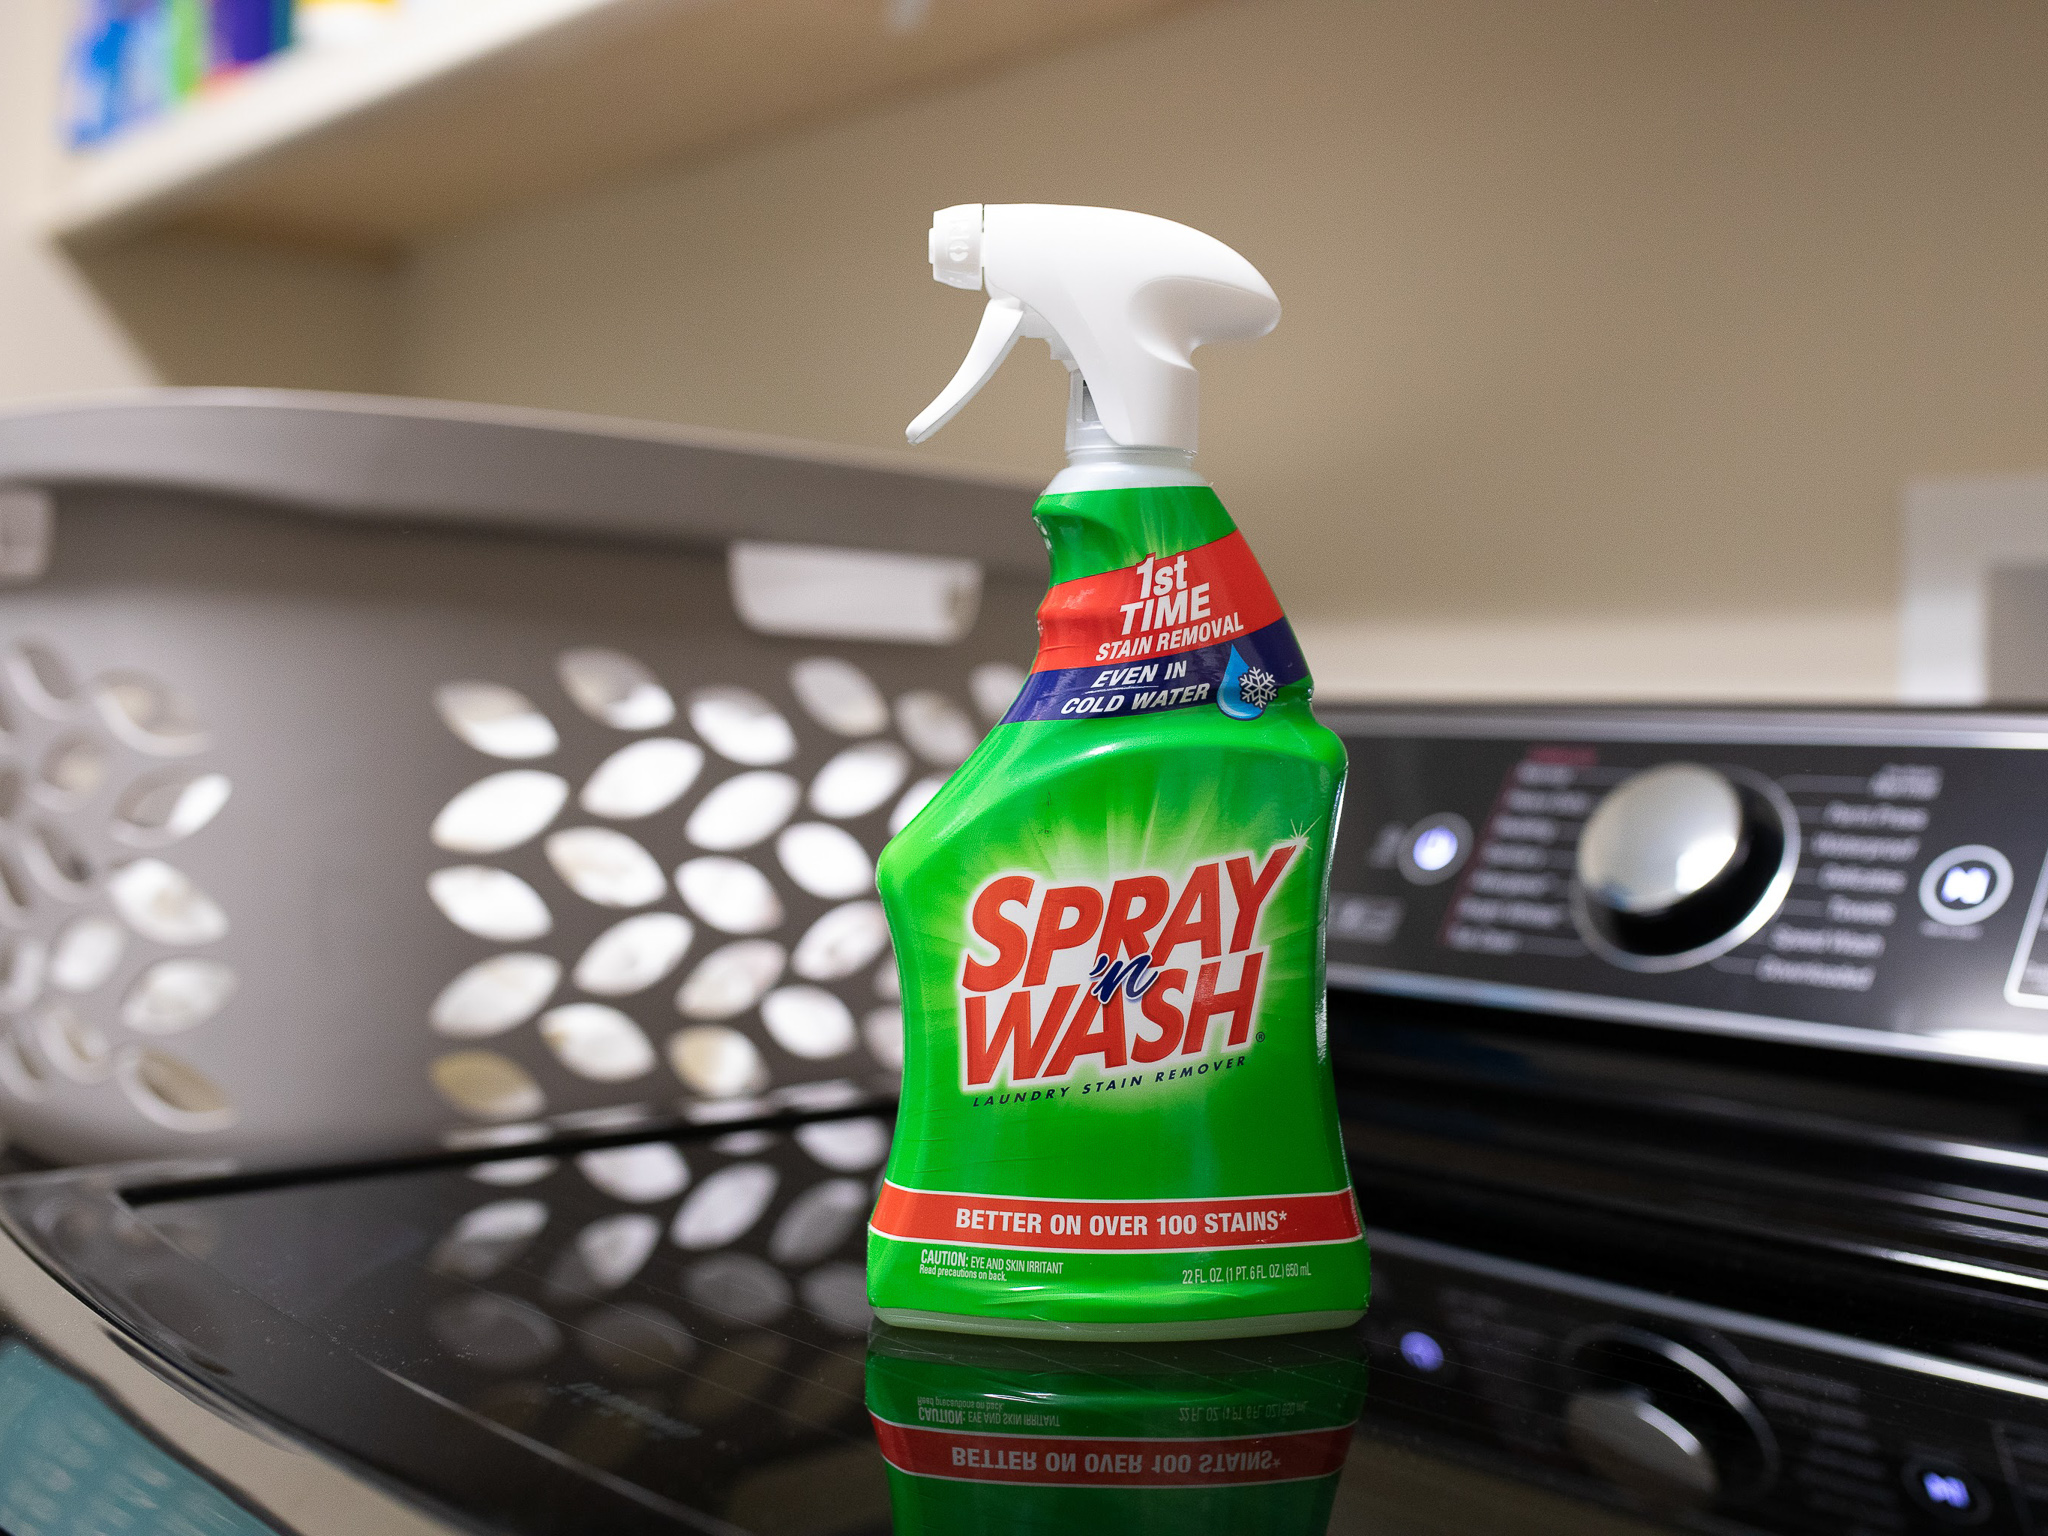 https://www.iheartkroger.com/wp-content/uploads/2022/05/Spray-wash-1.jpg